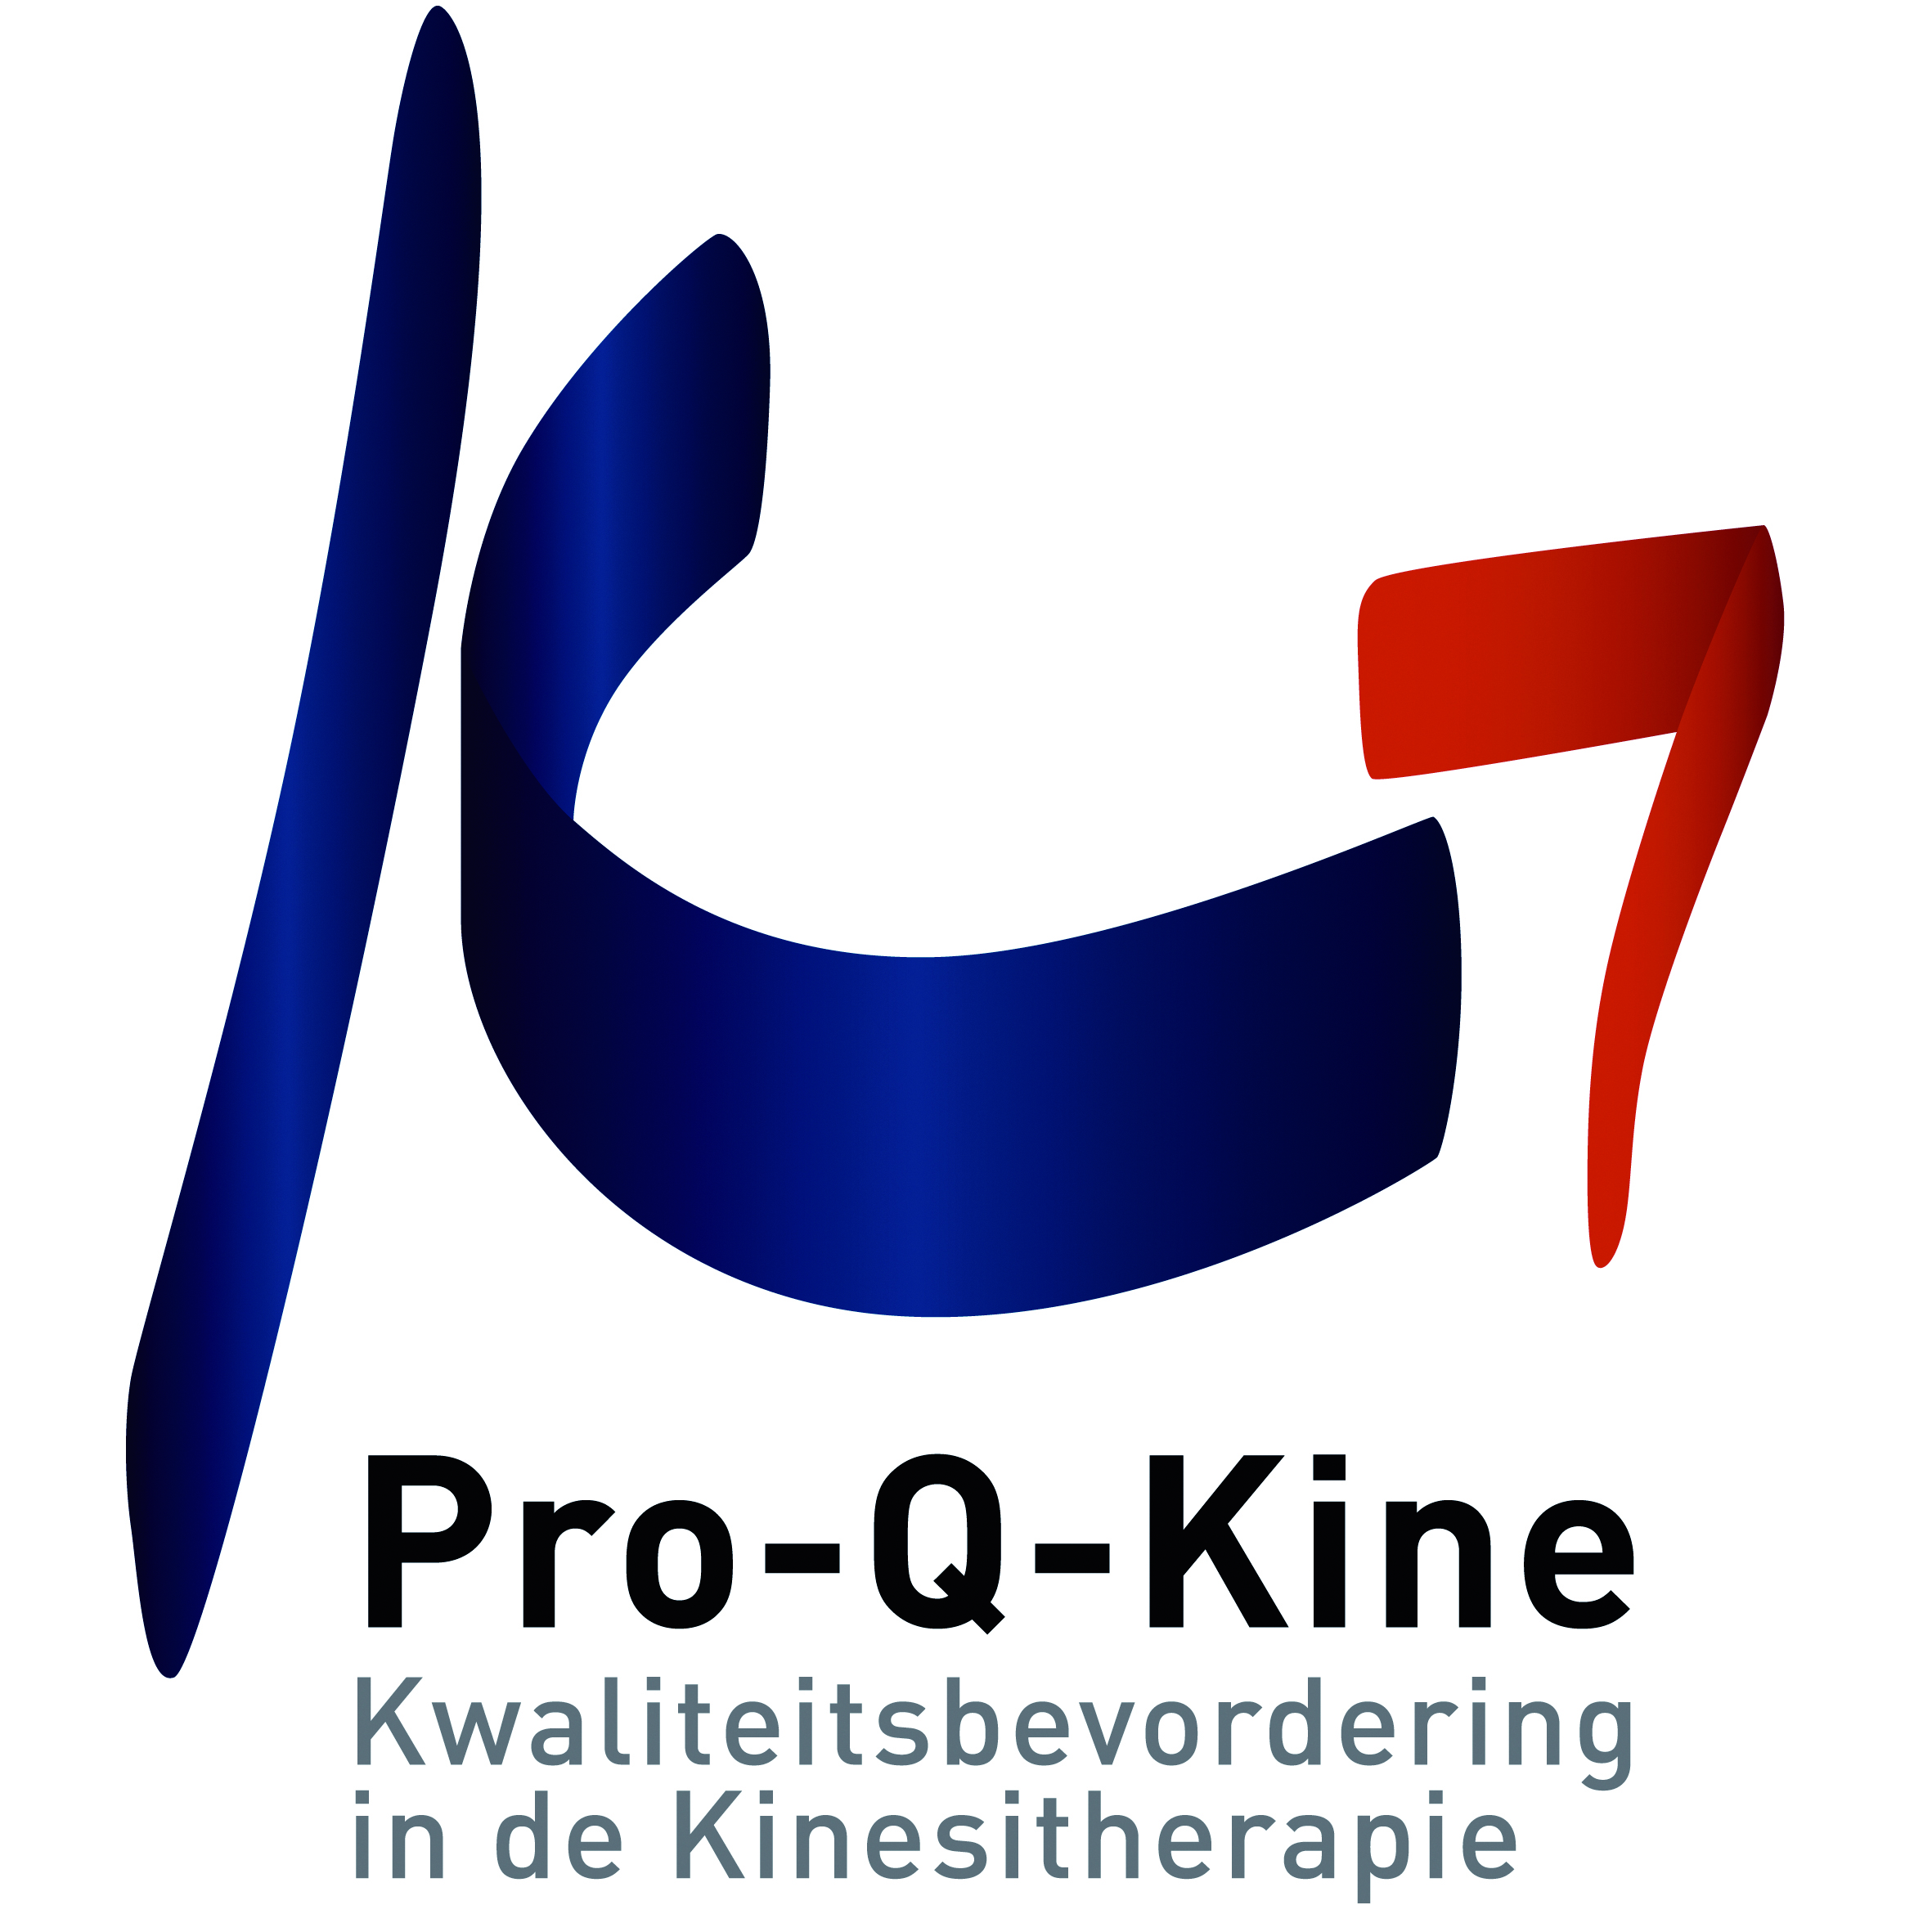 Pro-Q-Kine